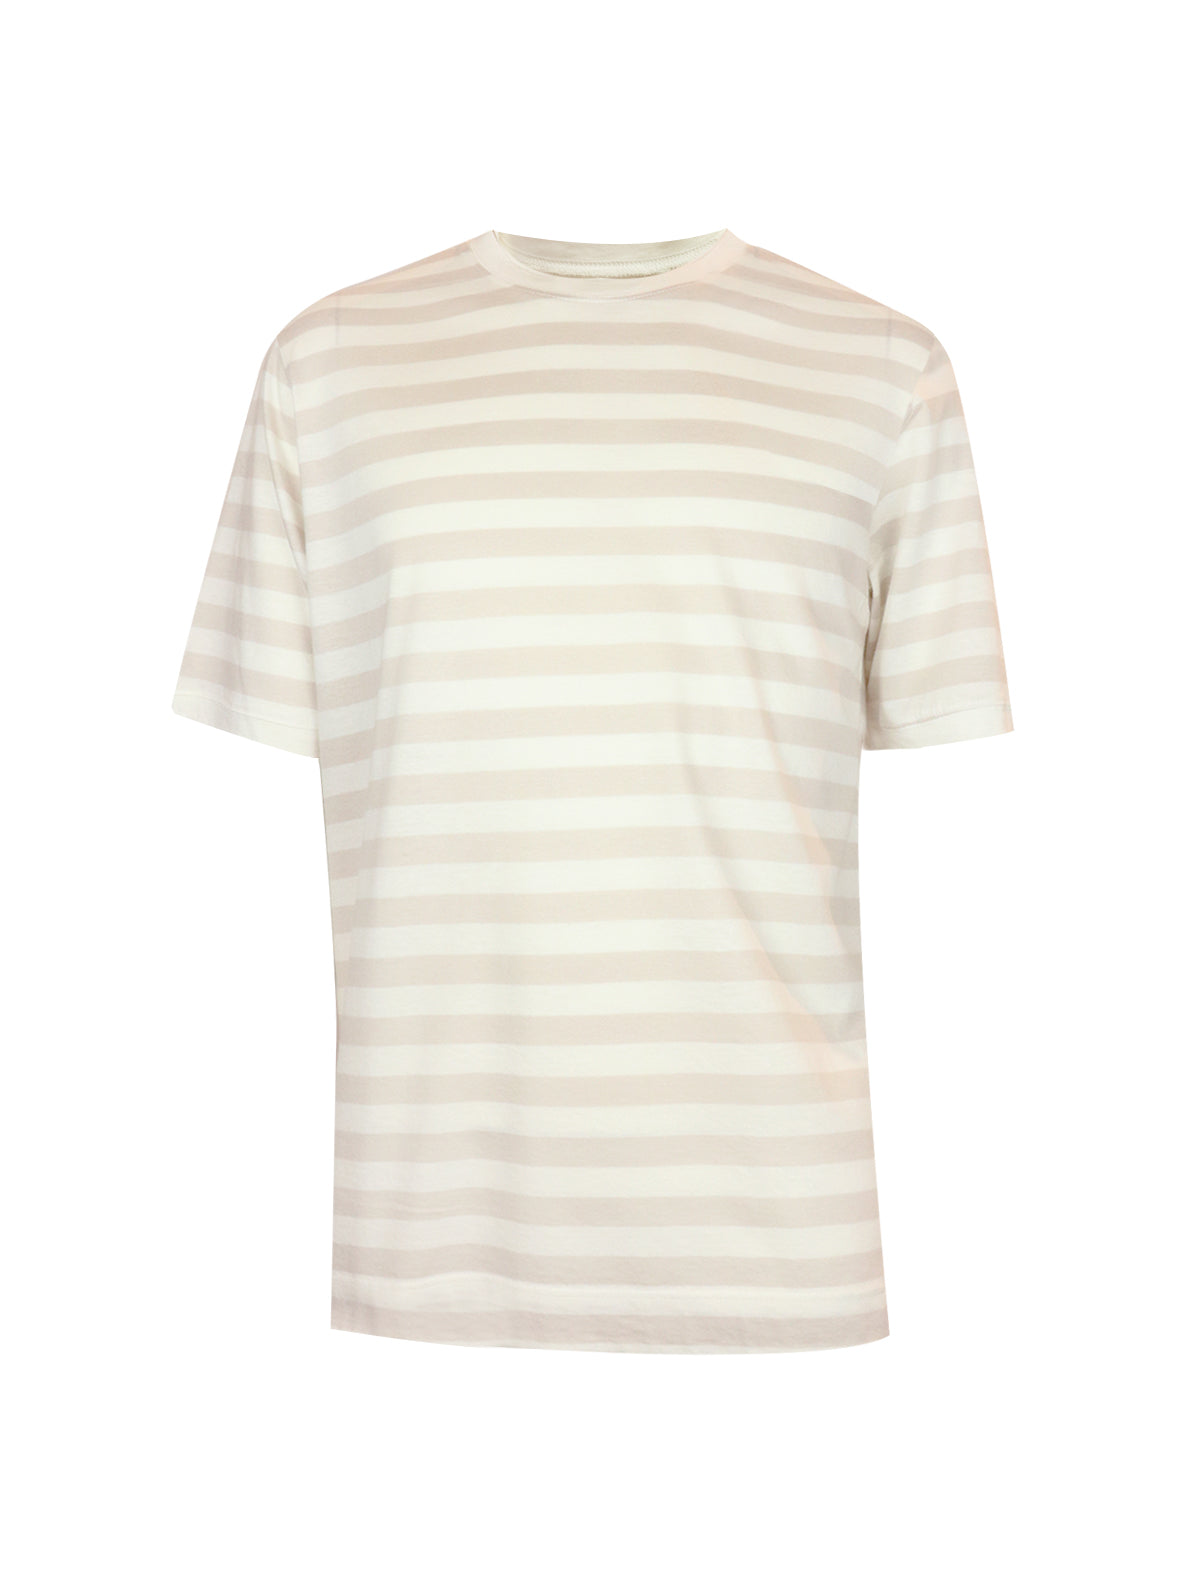 CIRCOLO 1901 Striped Jersey T-Shirt in Latte